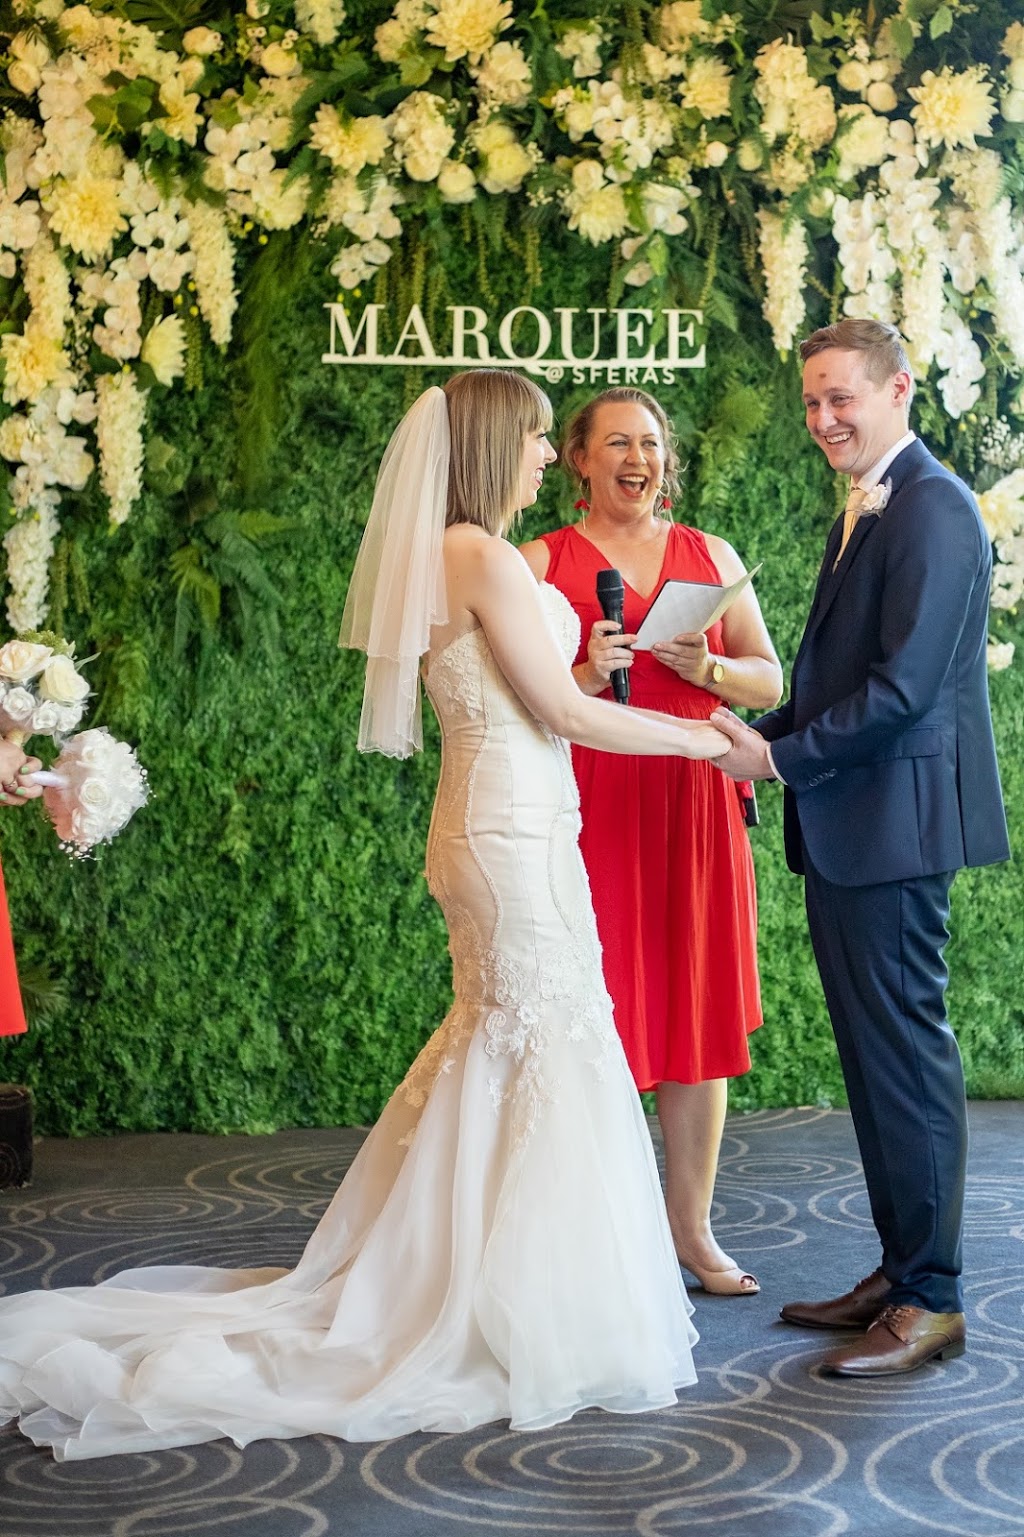 Marriage Celebrant, Amanda Schenk |  | 4 Liberty Ave, North Haven SA 5018, Australia | 0403237083 OR +61 403 237 083